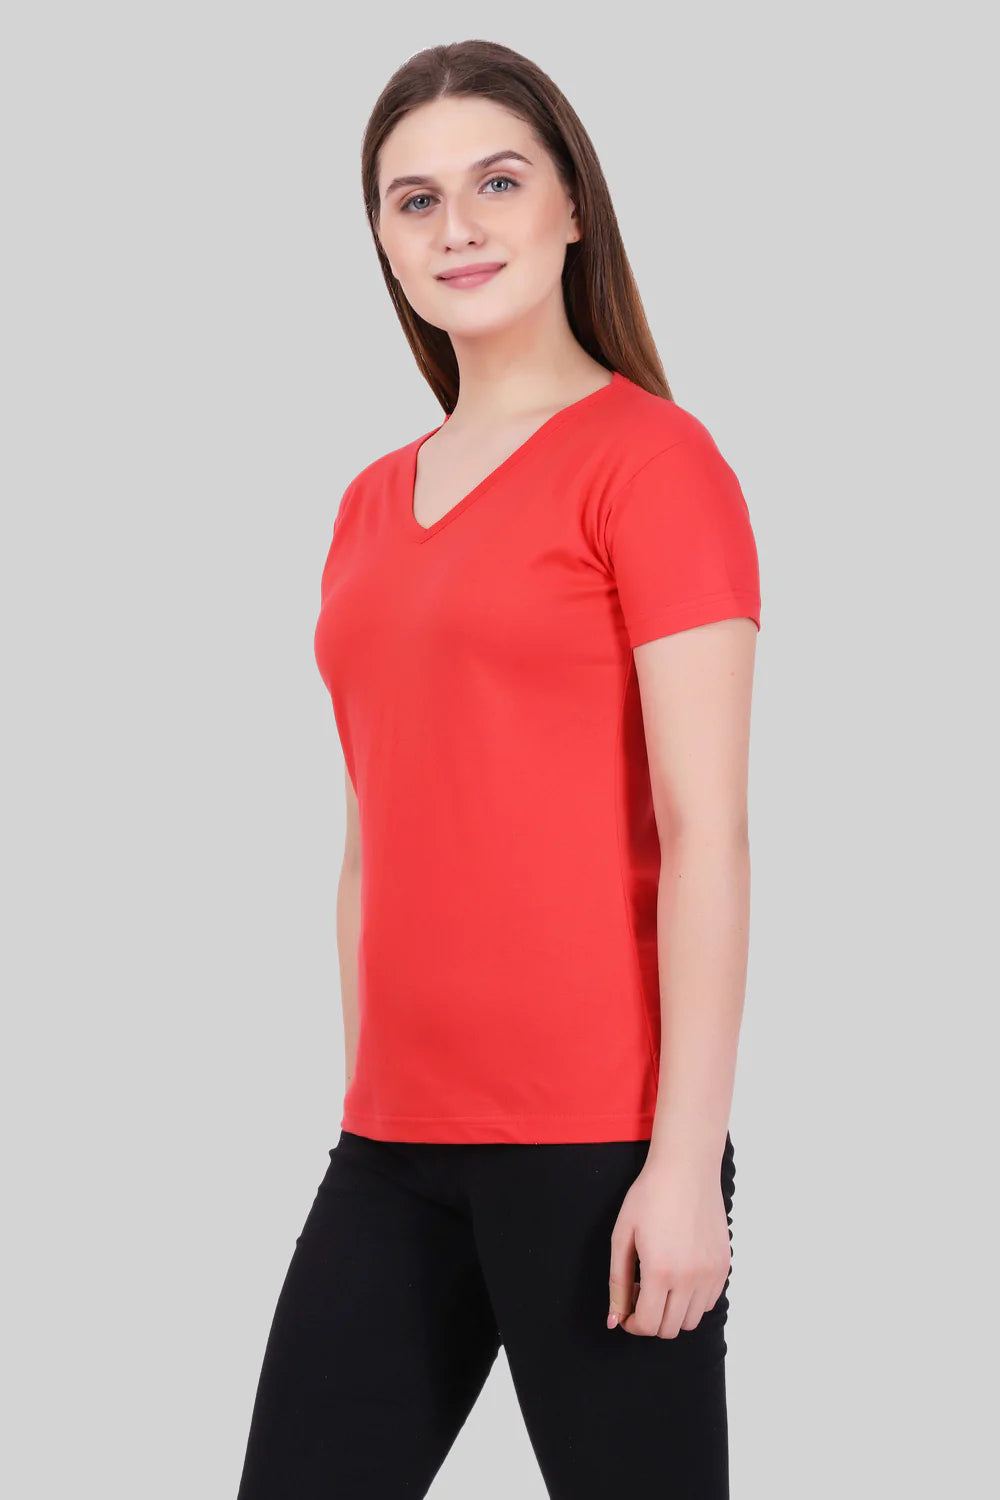 Women's Cotton Plain V Neck Half Sleeve Coral Red Color T-Shirt